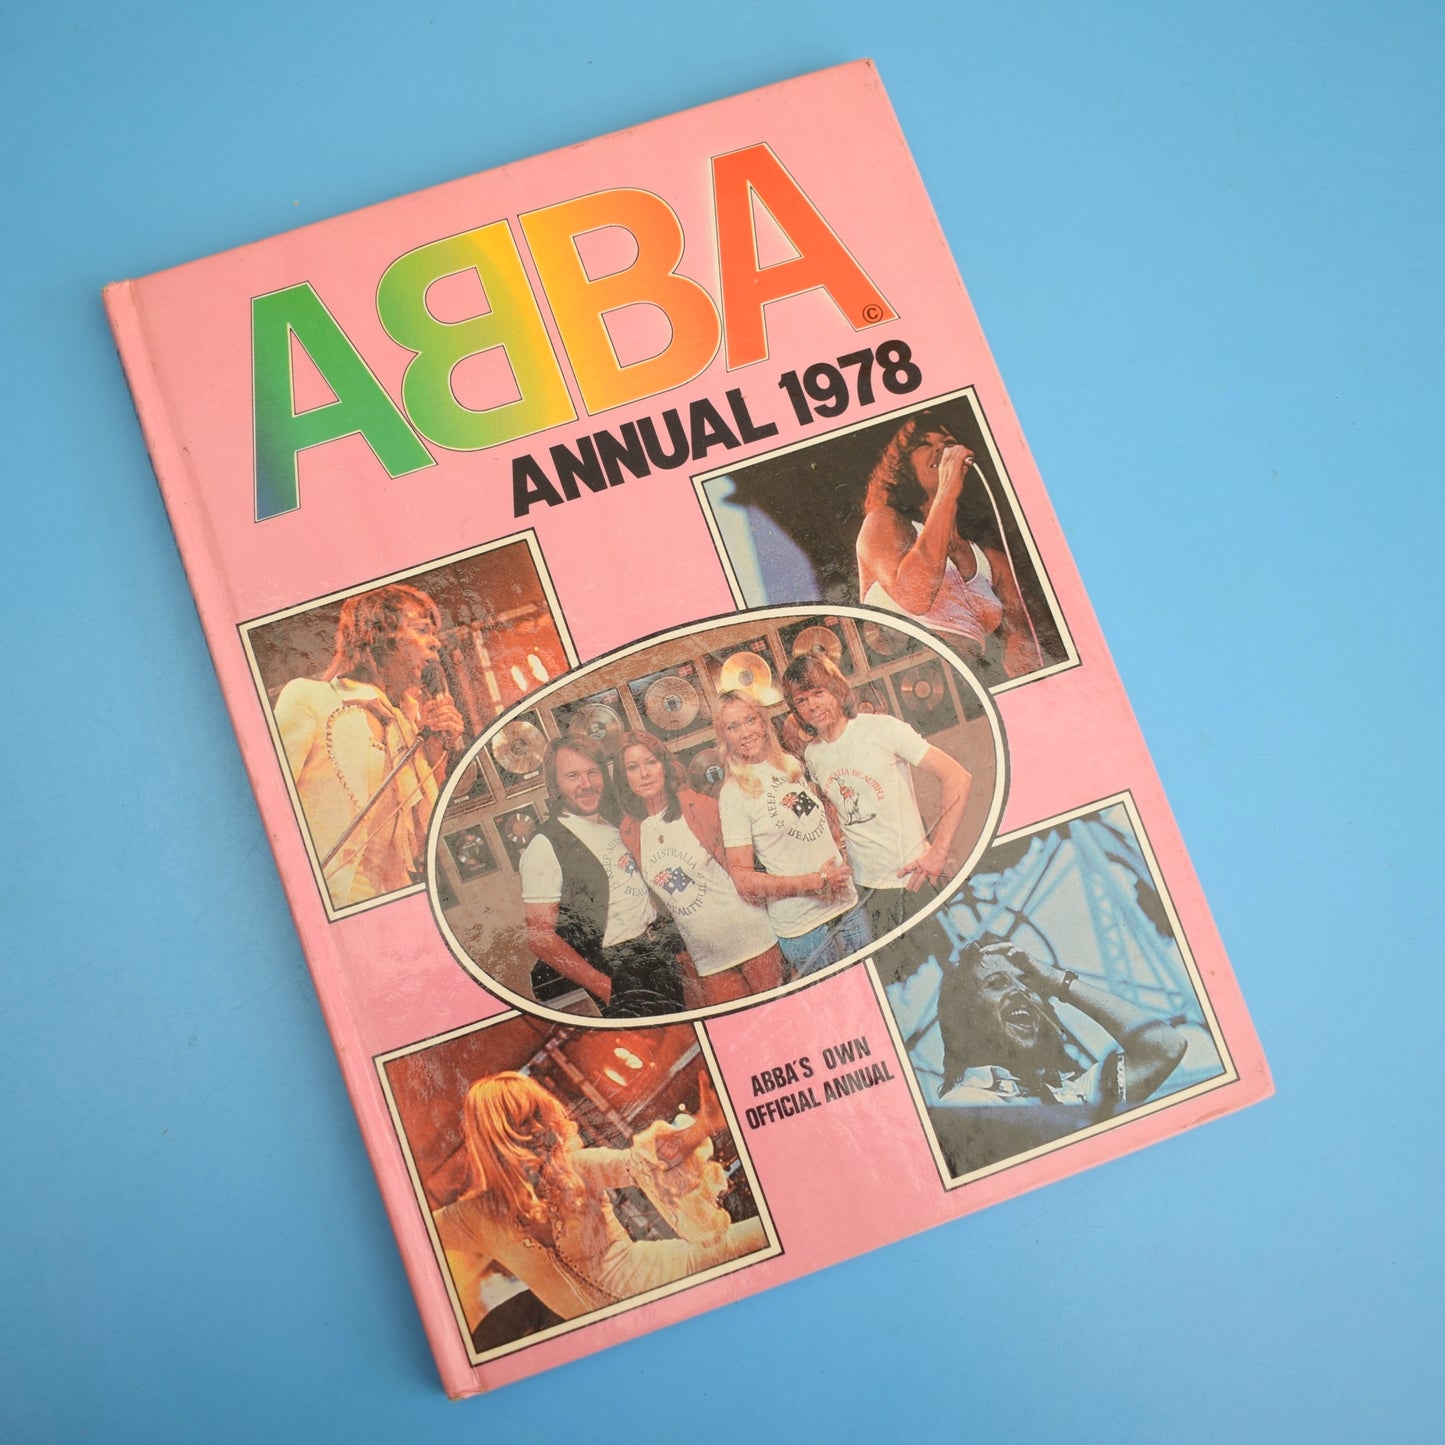 Vintage 1970s/ 80S ABBA Annuals